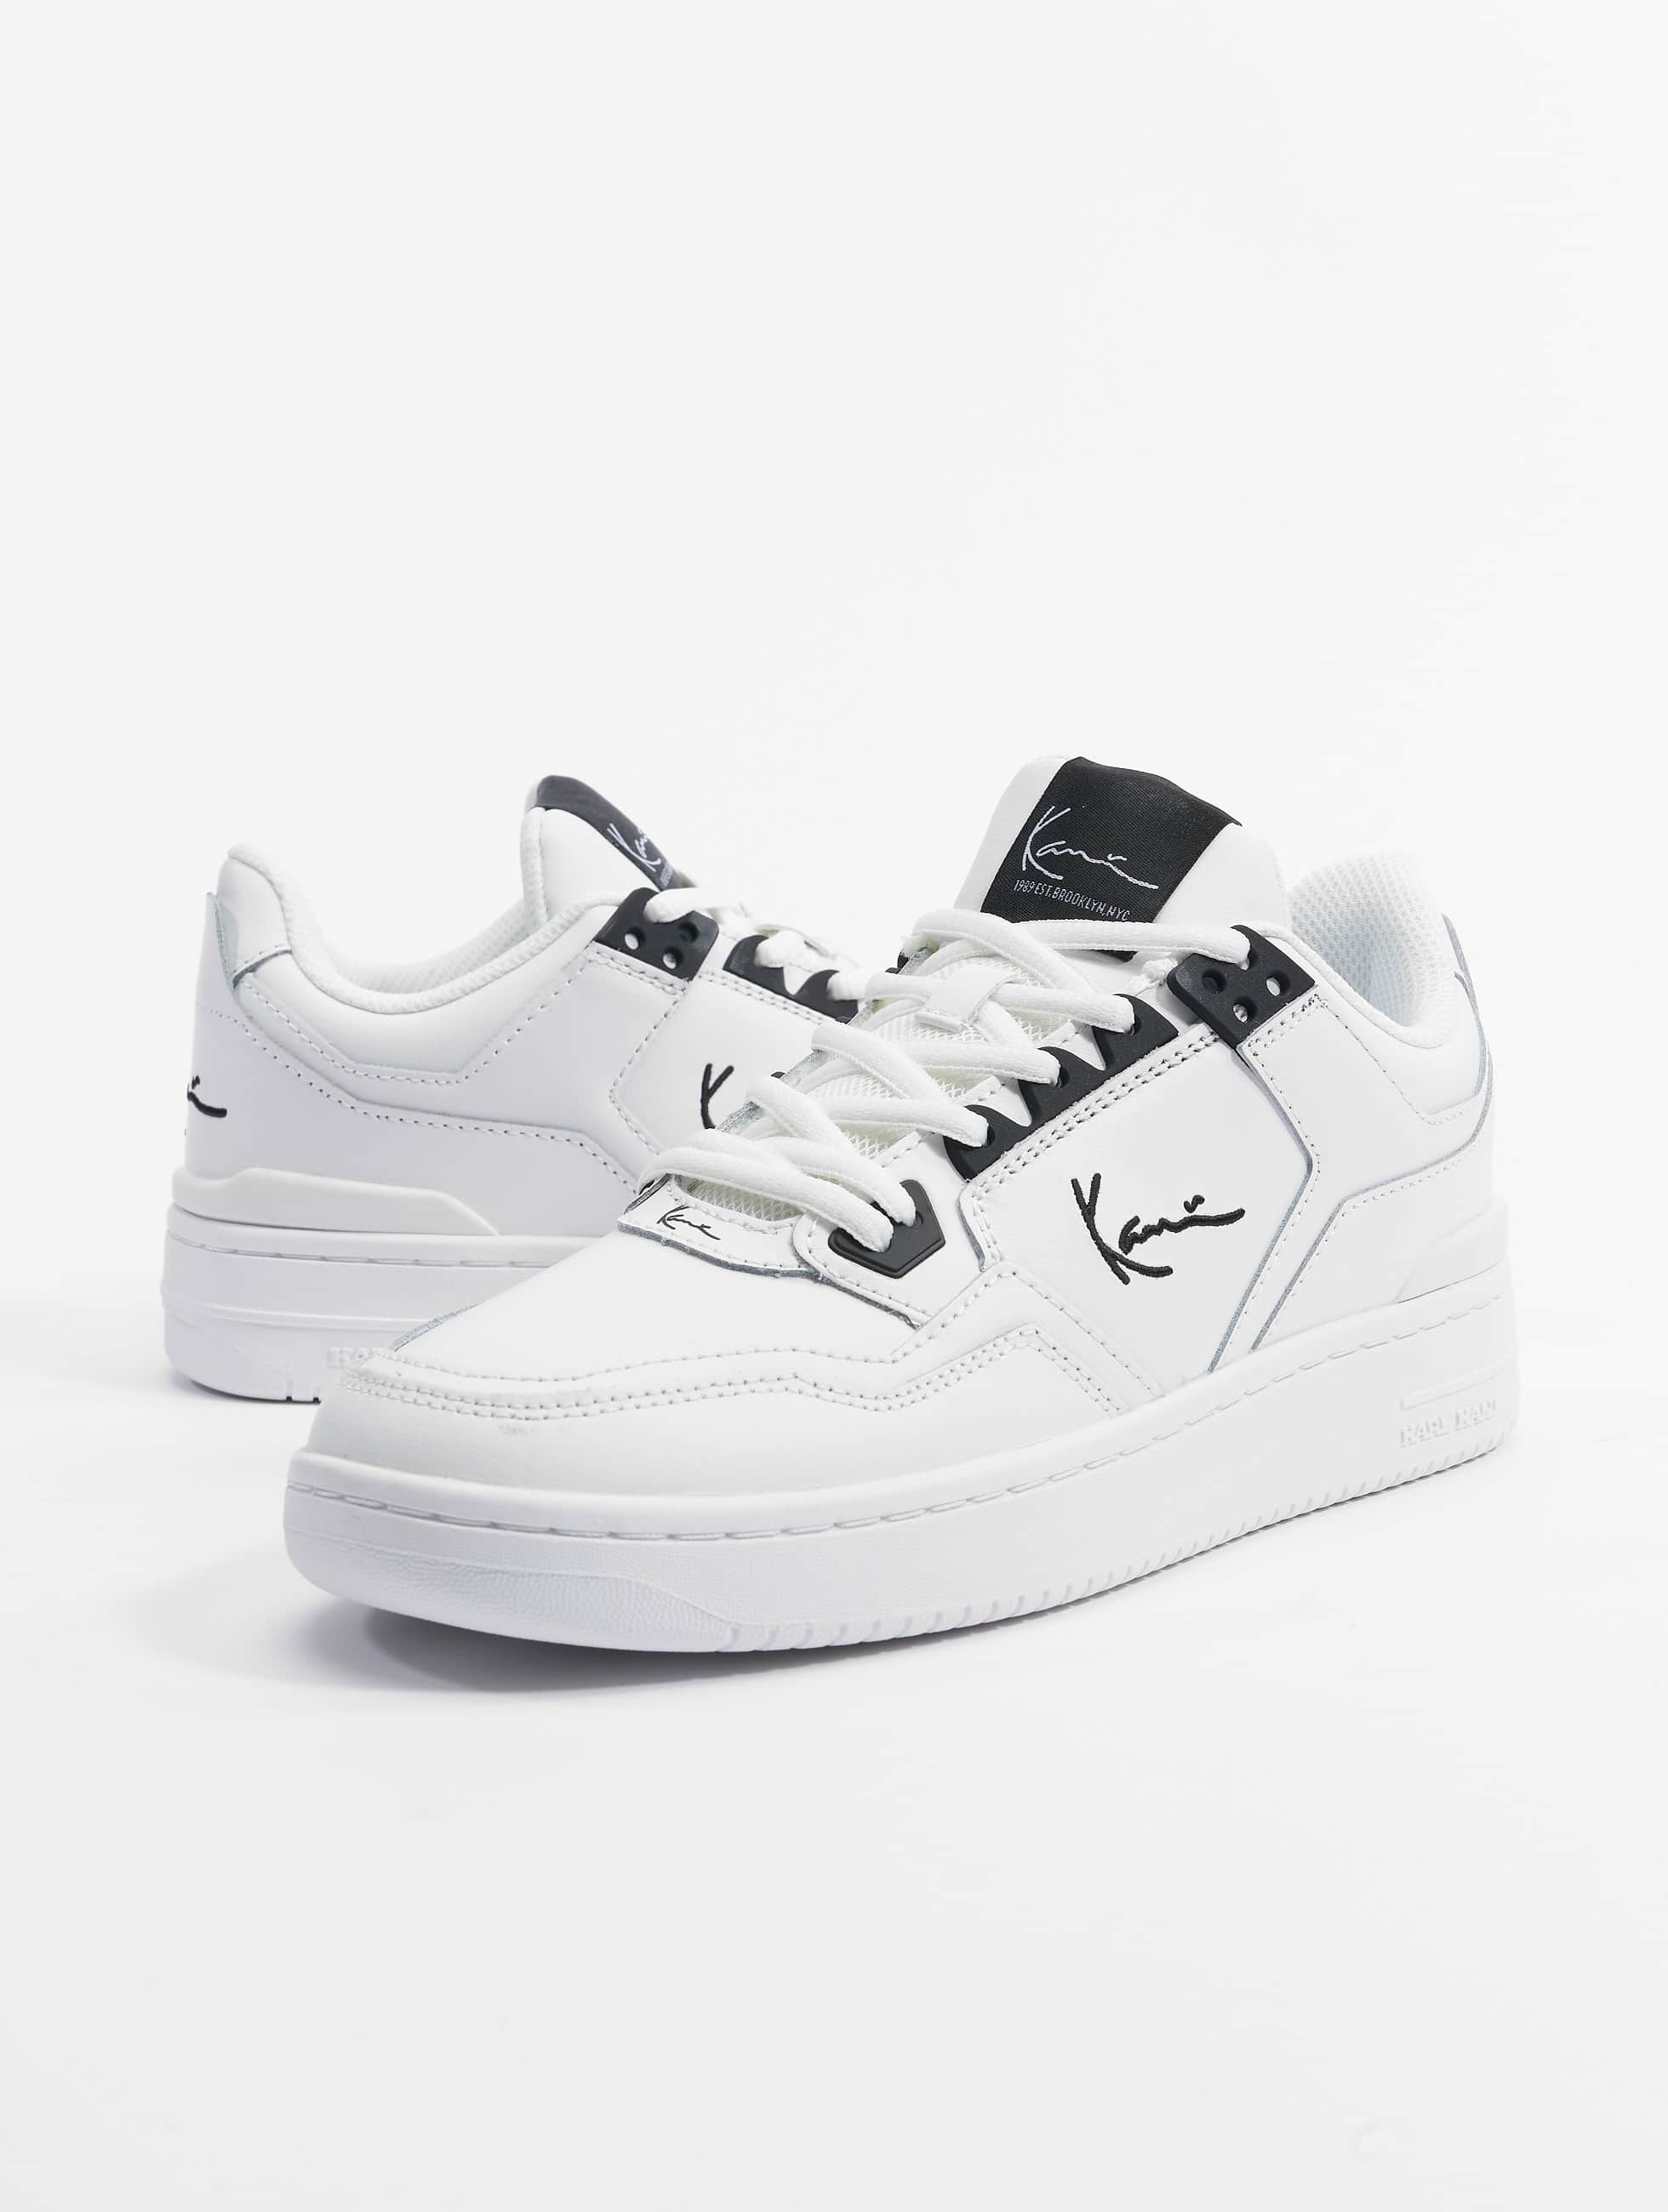 Karl Kani Shoe / Sneakers 89 LXRY in white 881805